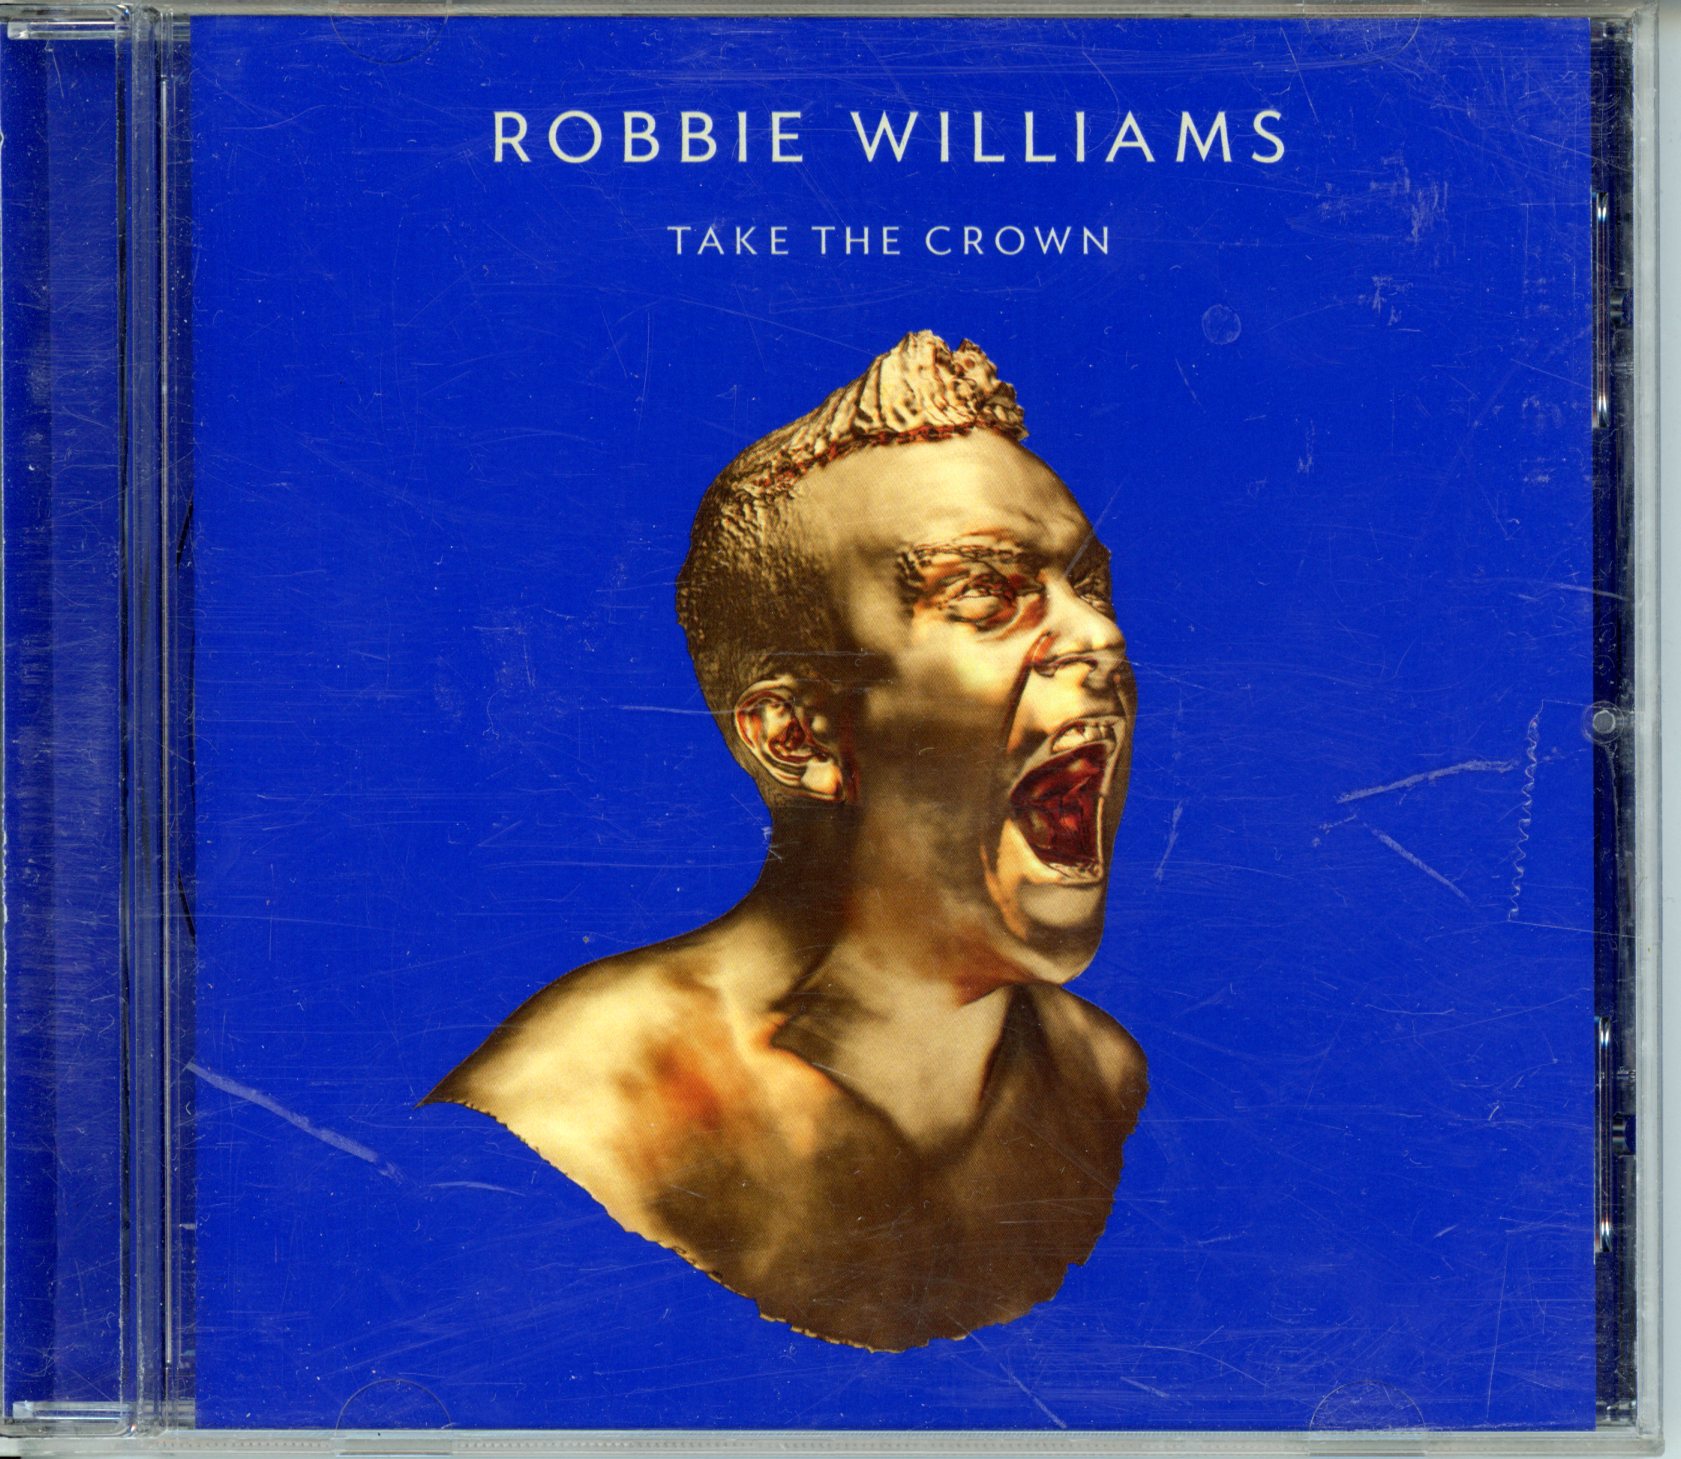 ROBBIE WILLIAMS TAKE THE CROWN